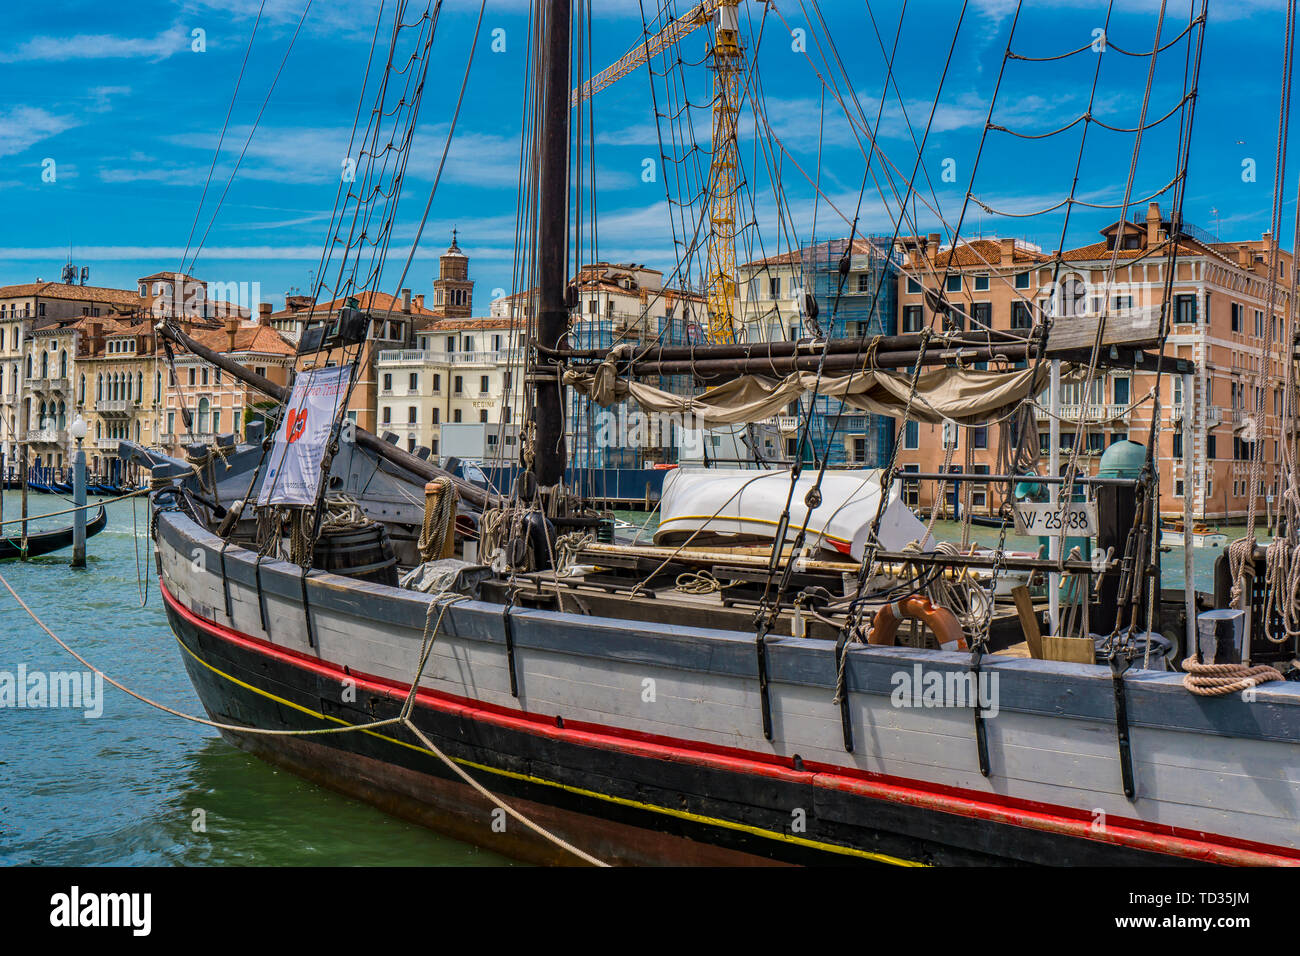 Venedig, Italien, 26. MAI 2019: Blick auf Il Nuovo Trionfo, letzte Arbeiten trabaccolo Segelschiff in Venedig, Italien. Schiff wurde von Ferdinando Ubalducci gebaut Stockfoto